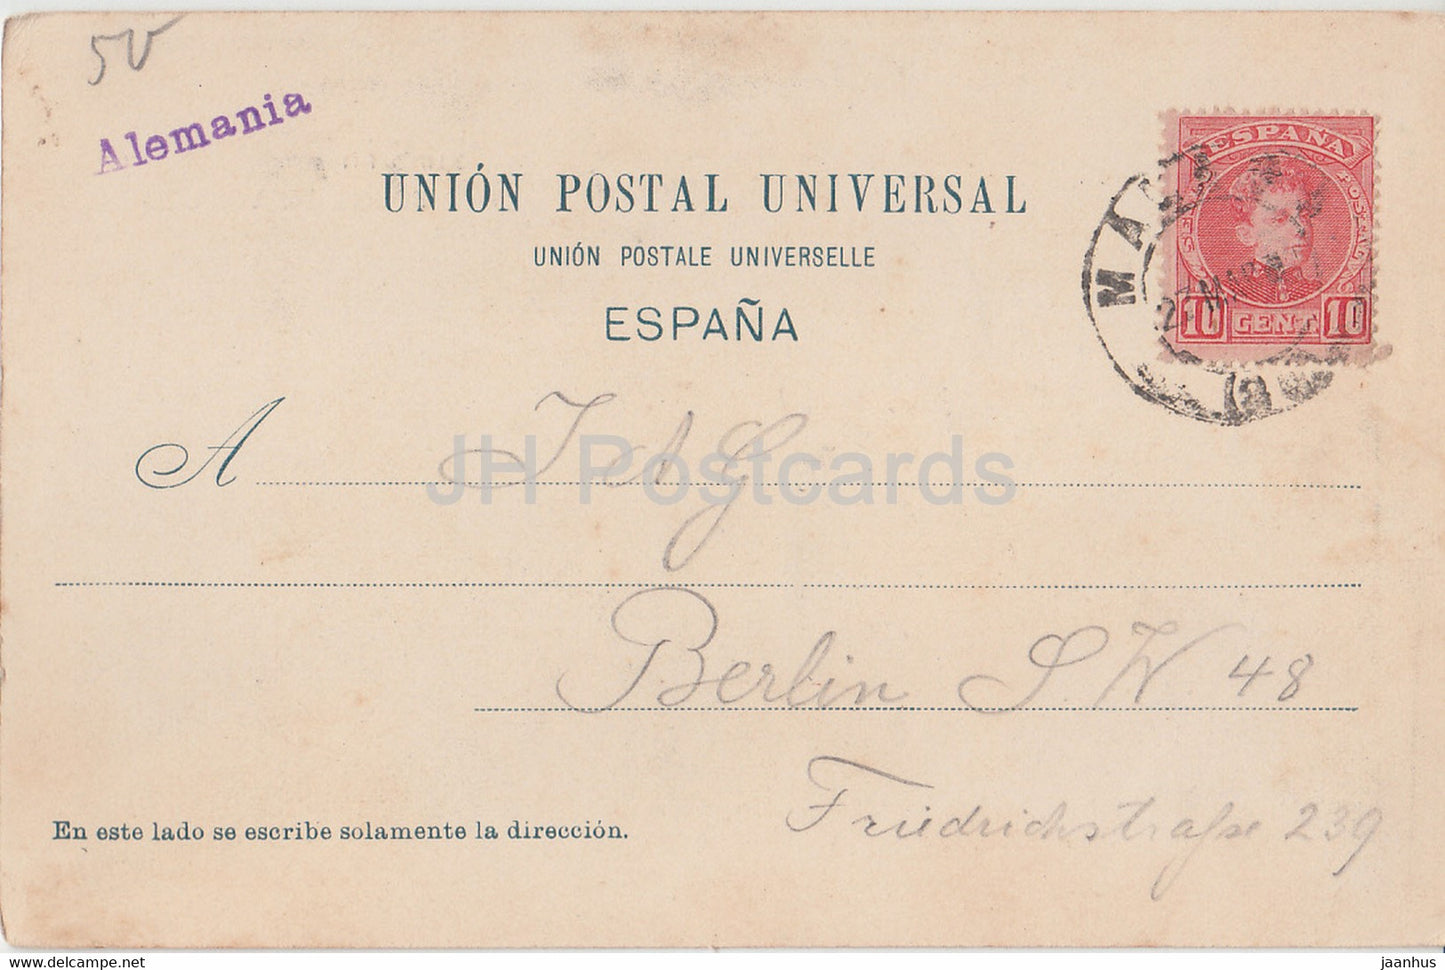 Corrida de Toros - Un Quite - 210 - carte postale ancienne - Espagne - occasion